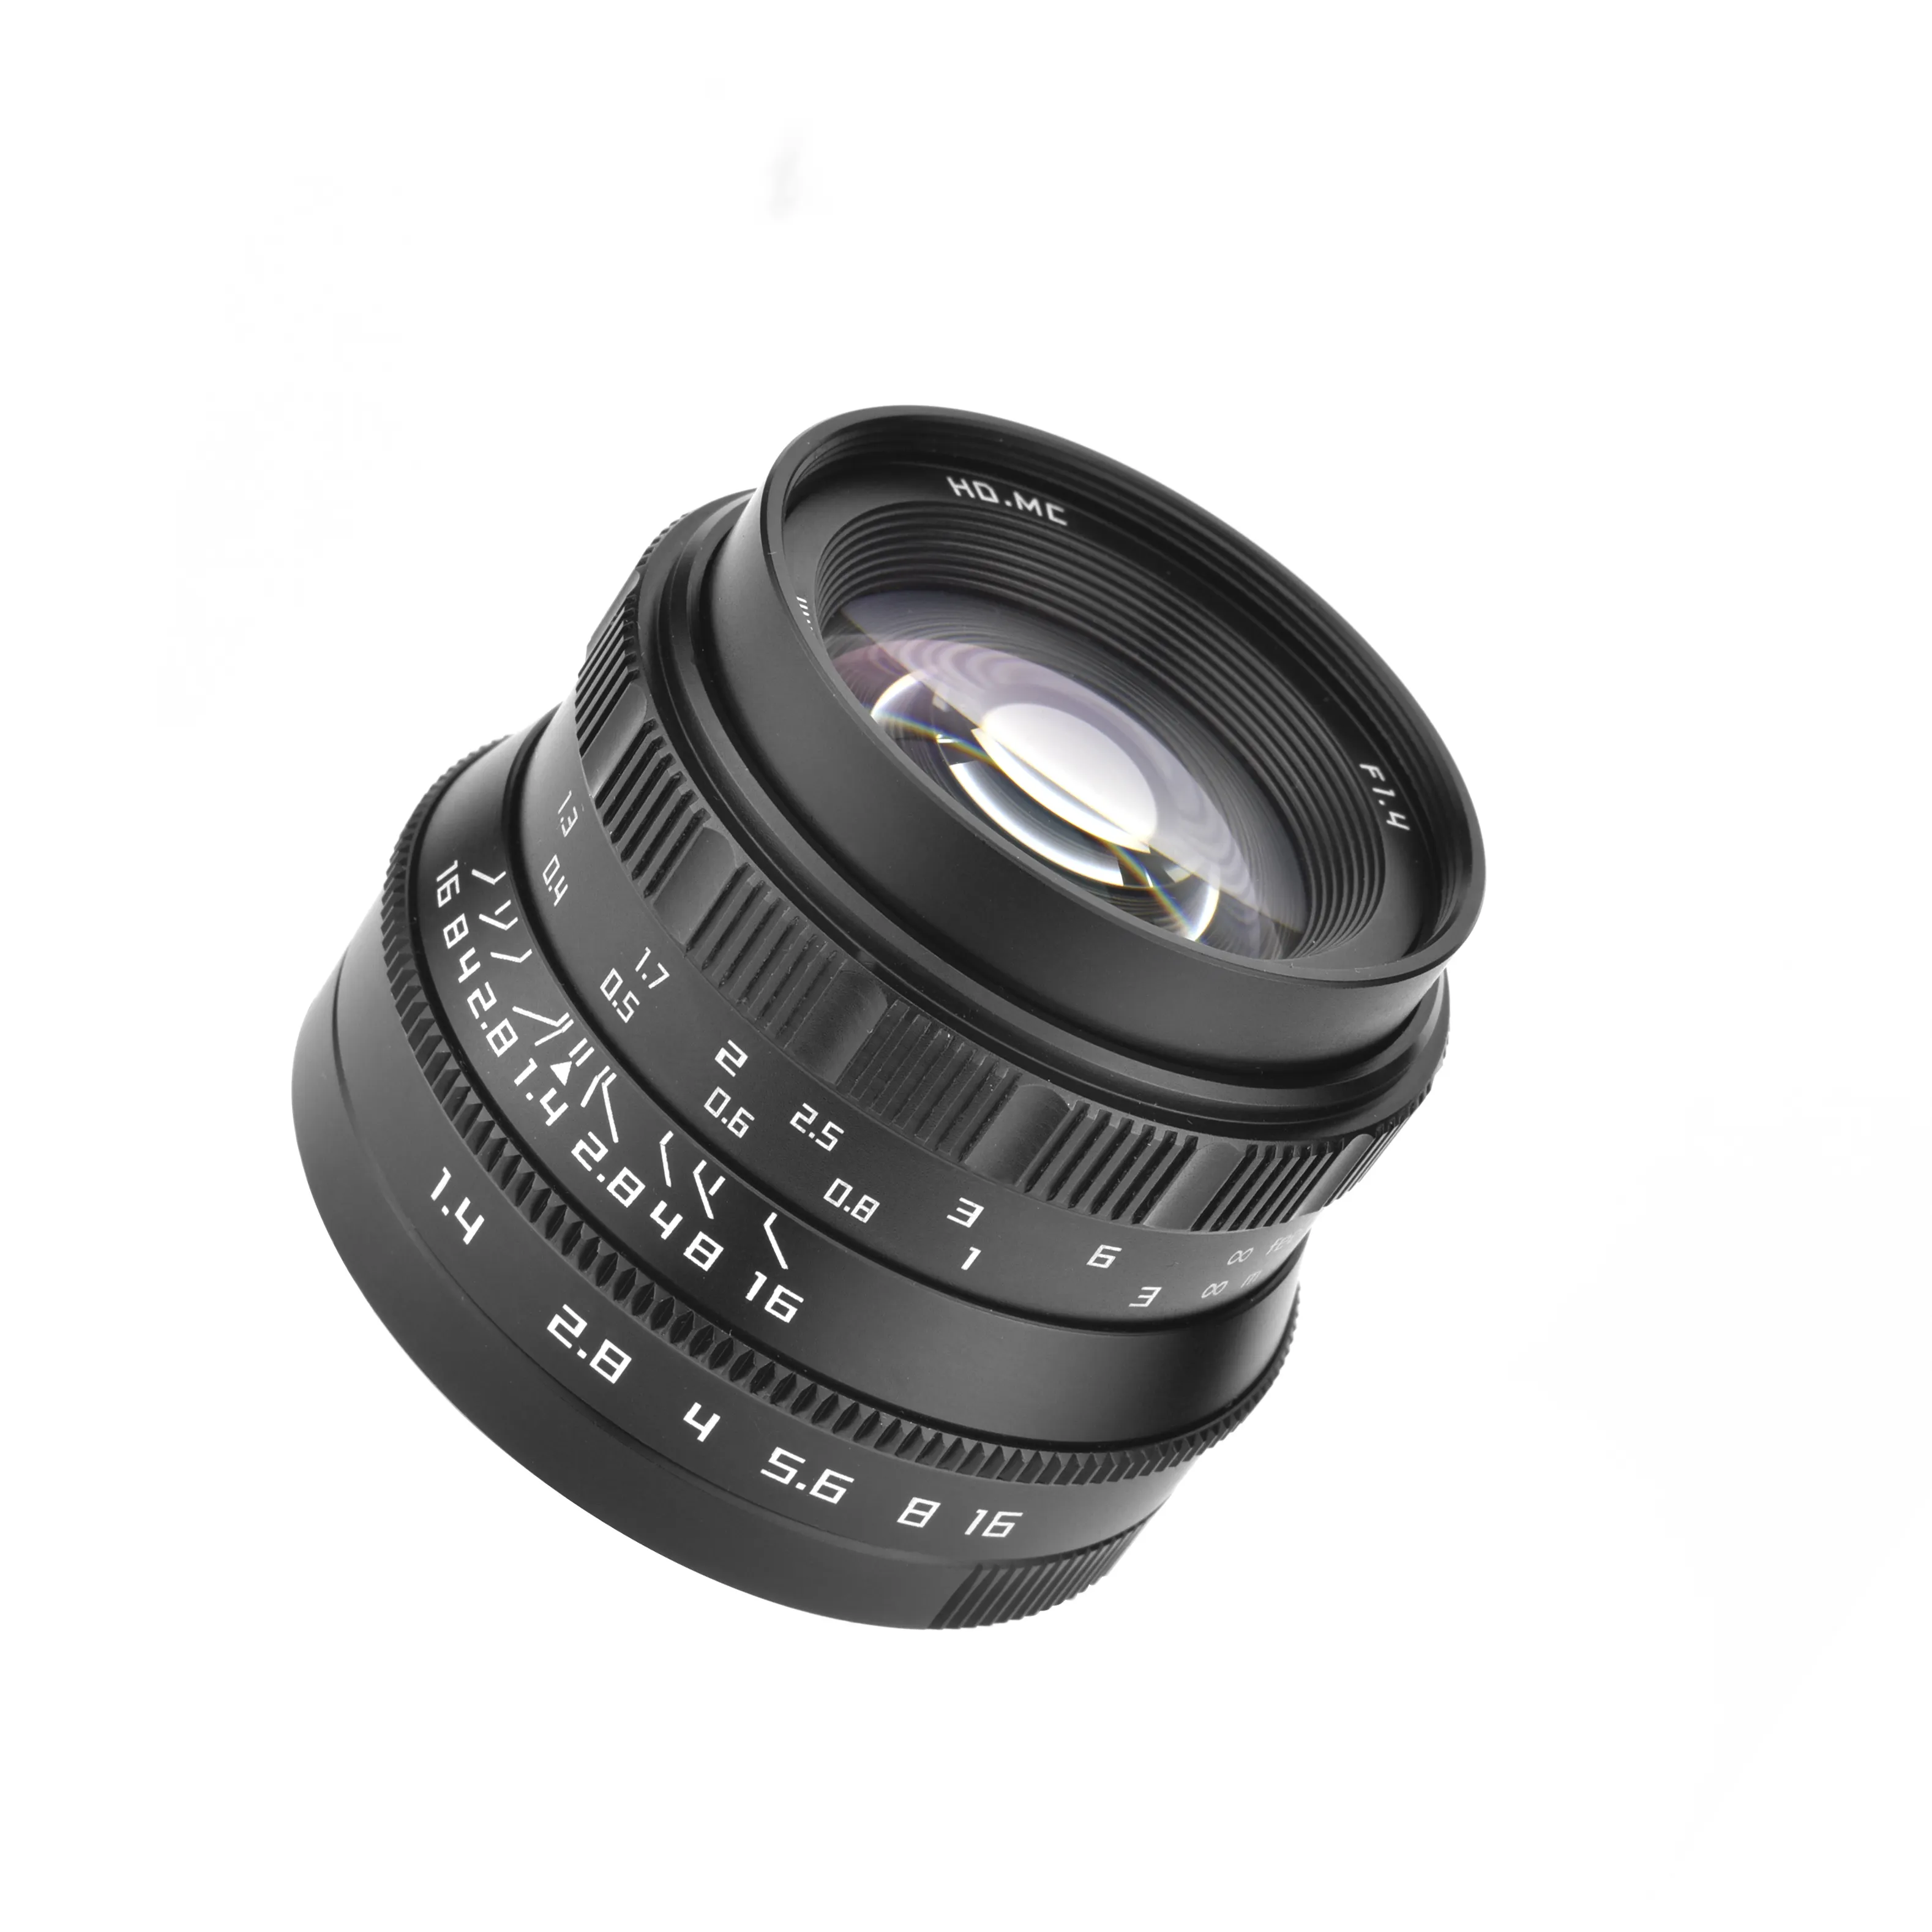 Hot Sell Now Mirrorless Digital Camera 35mm F1.4 Portrait Lens